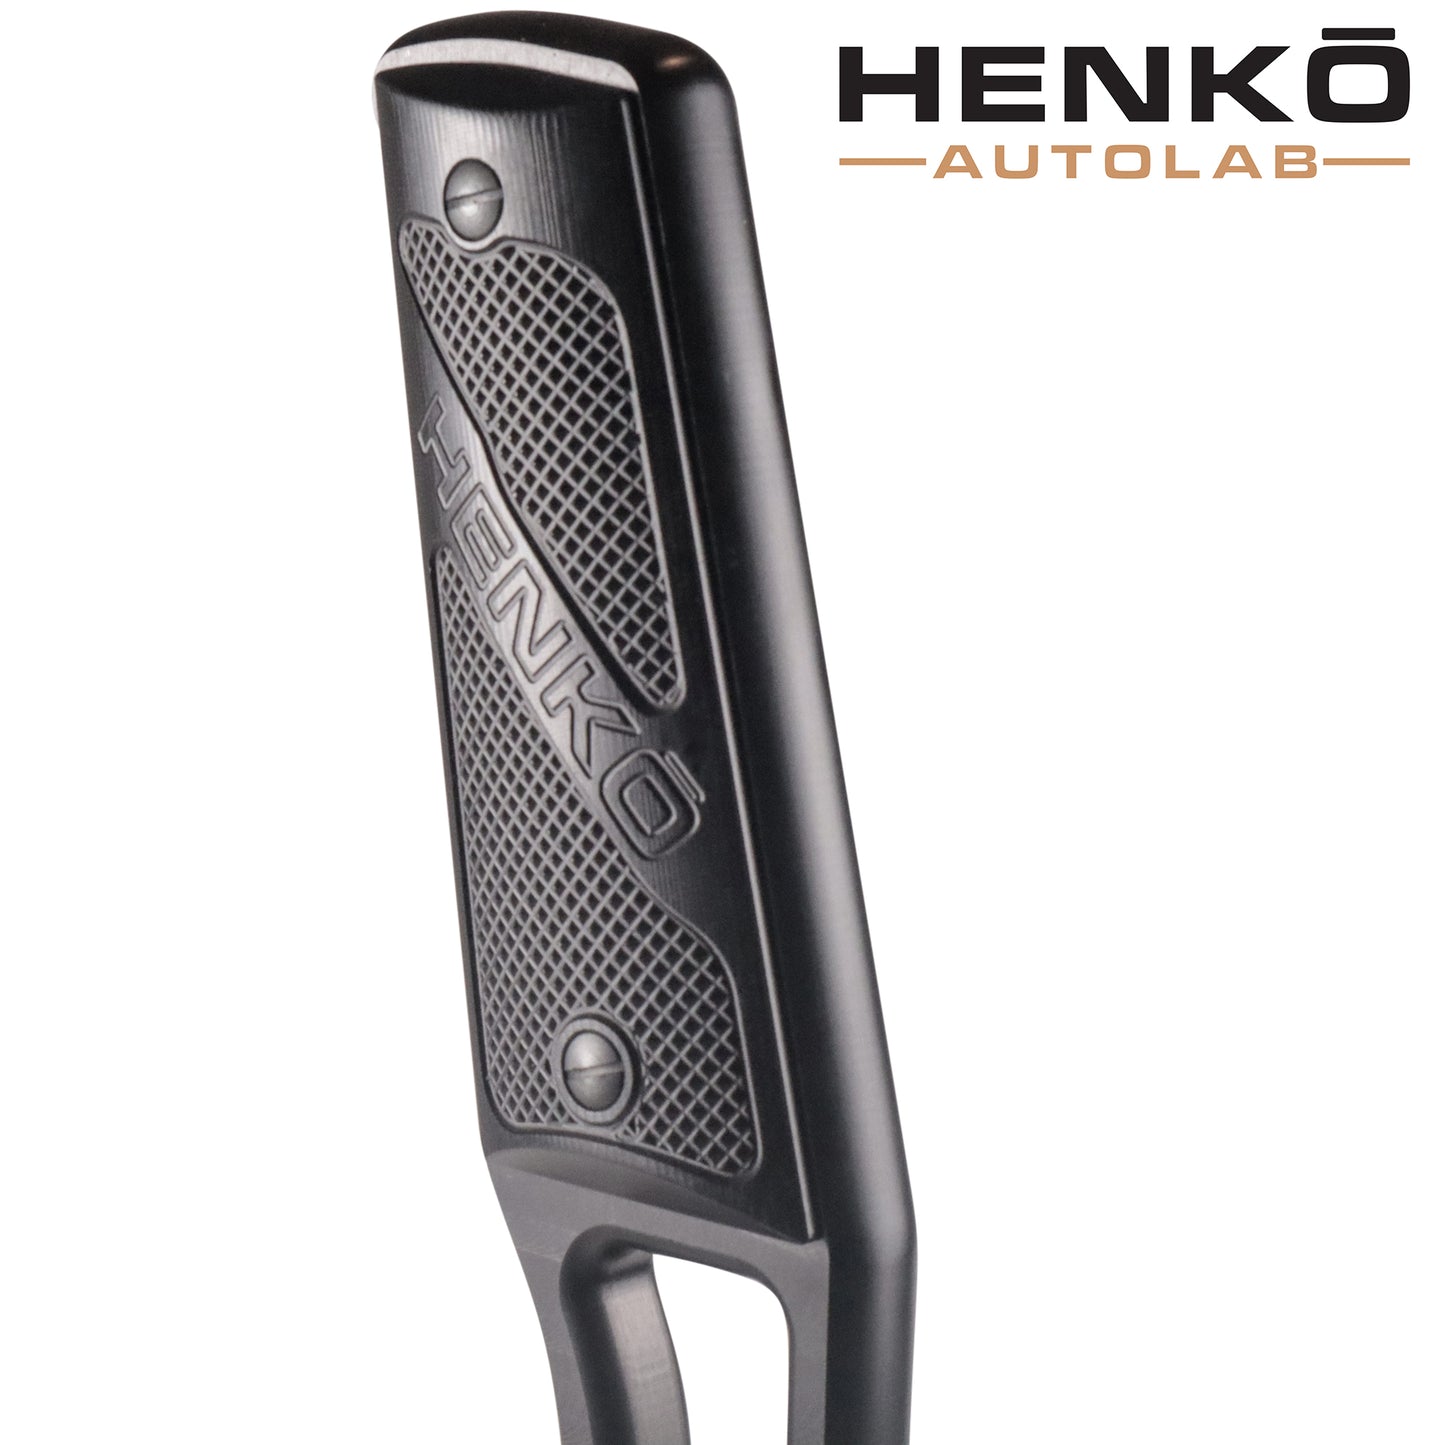 Henko AutoLab - Low Pro Reverse -350Z/G35 Edition Hydro E Brake